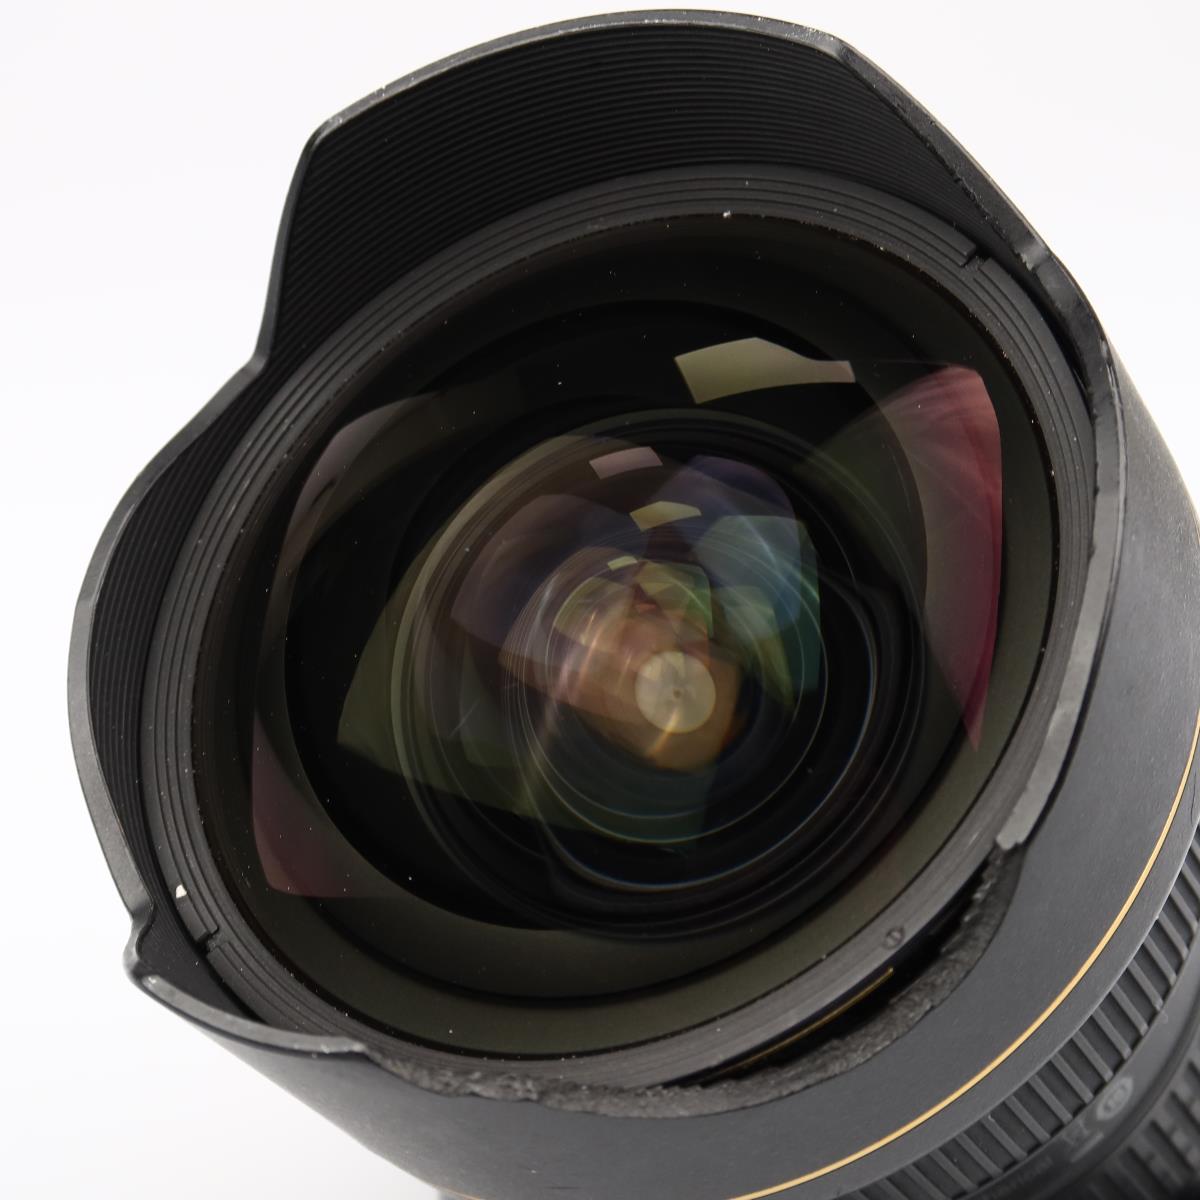 (myyty)Nikon AF-S Nikkor 14-24mm f/2.8G ED (käytetty) (sis ALV)